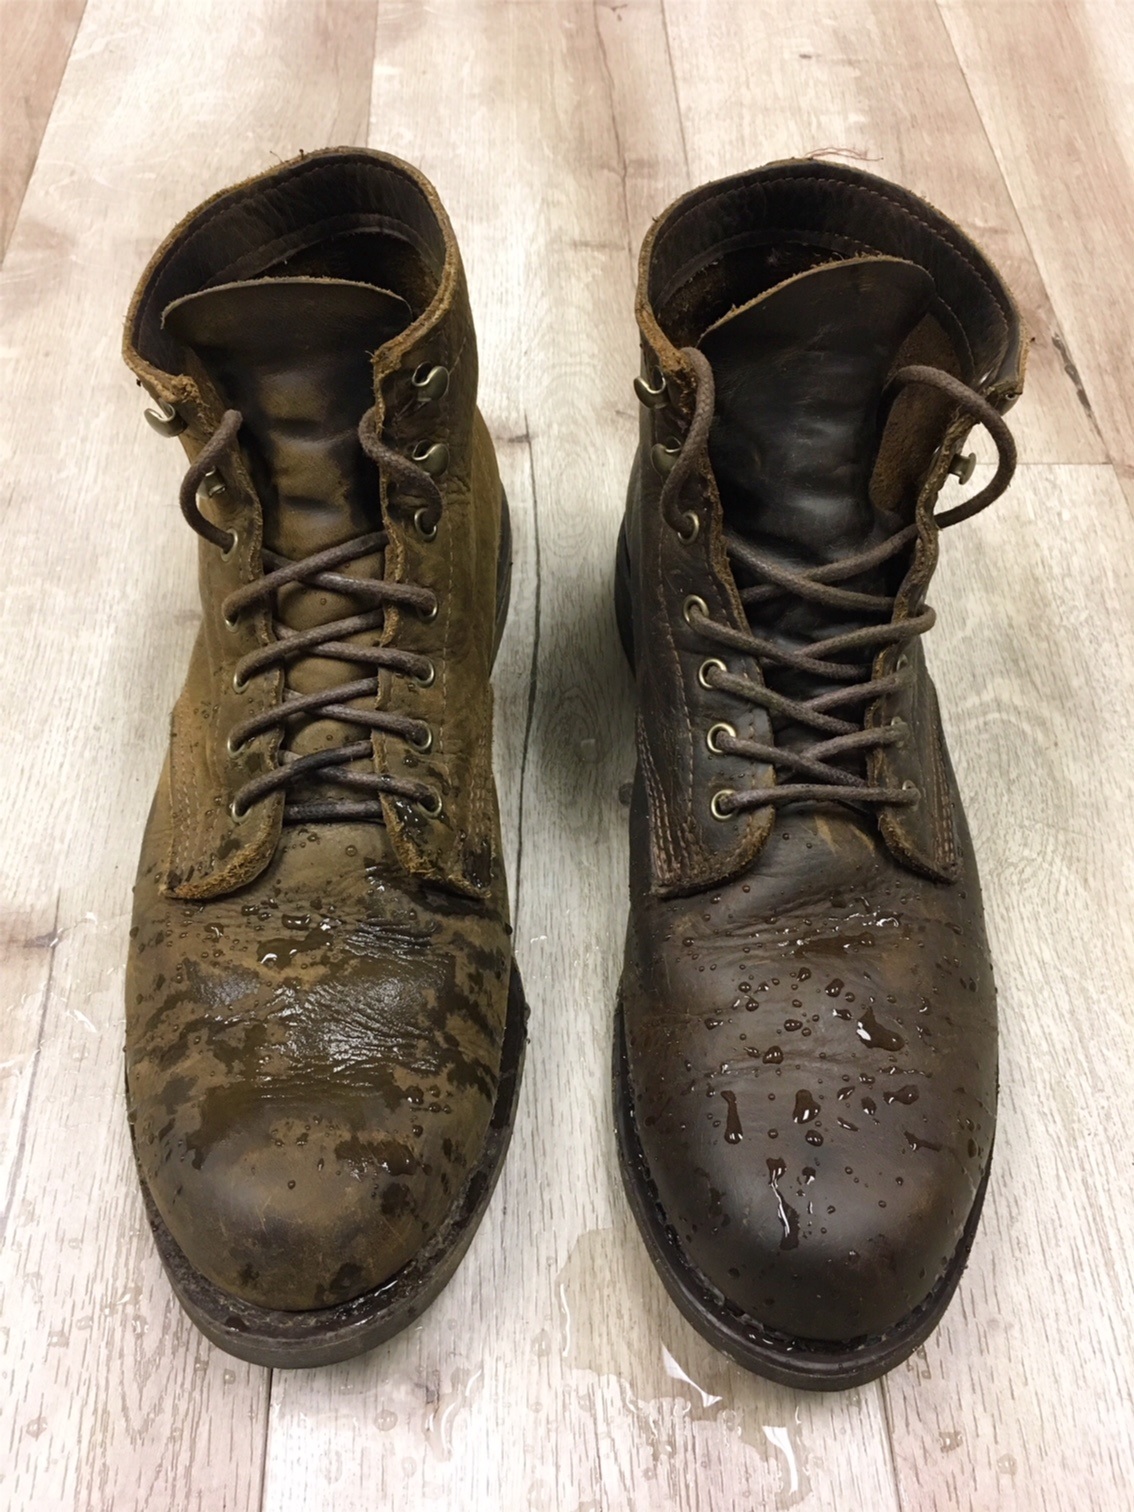 leather boot waterproofing wax